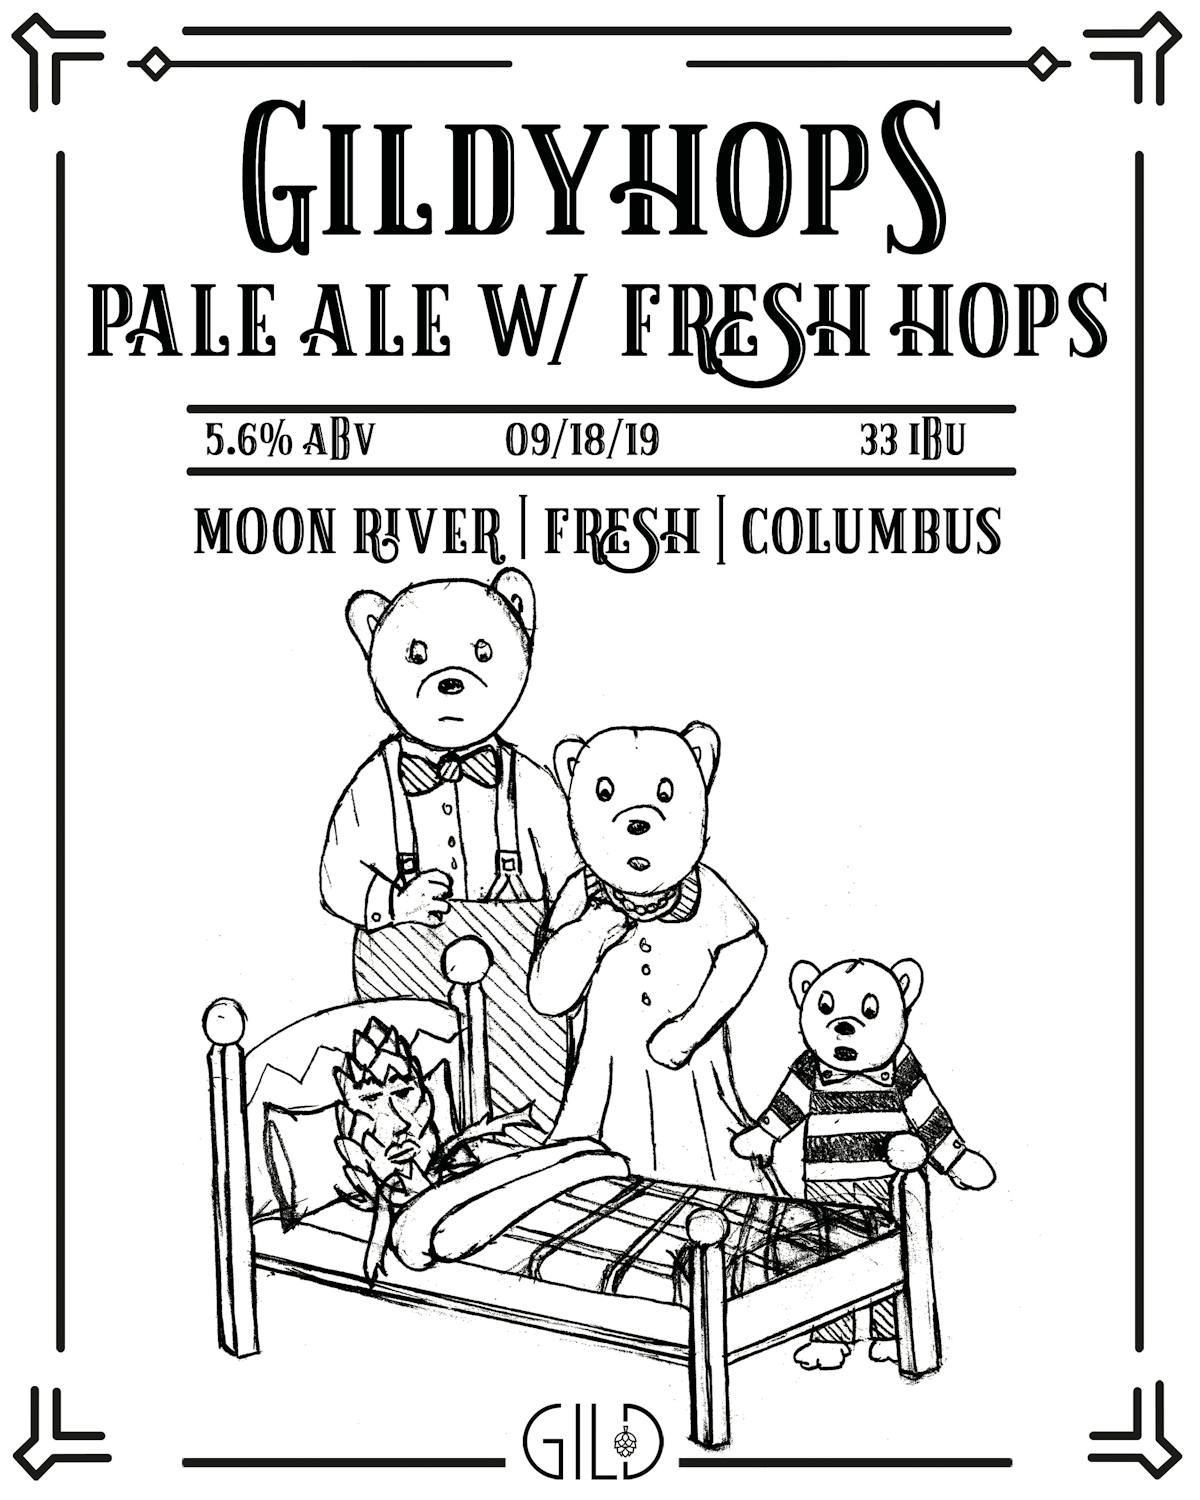 Gildyhops bear logo